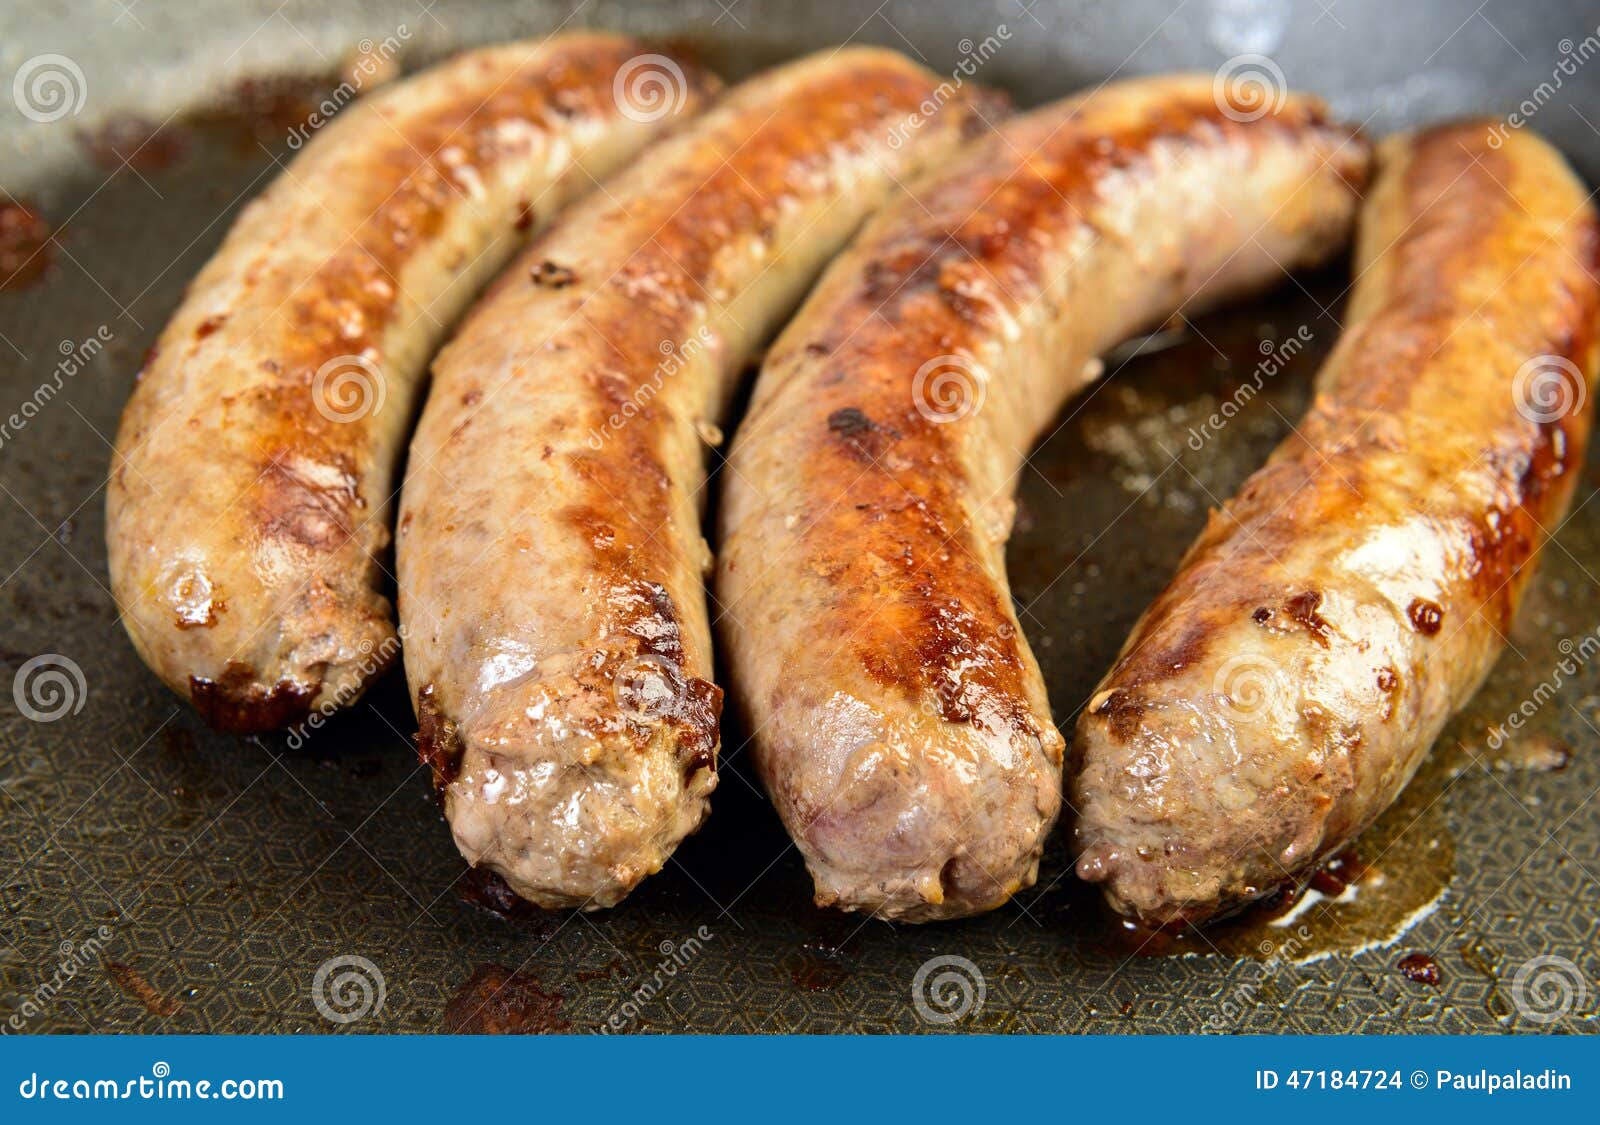 cooked pork sausage